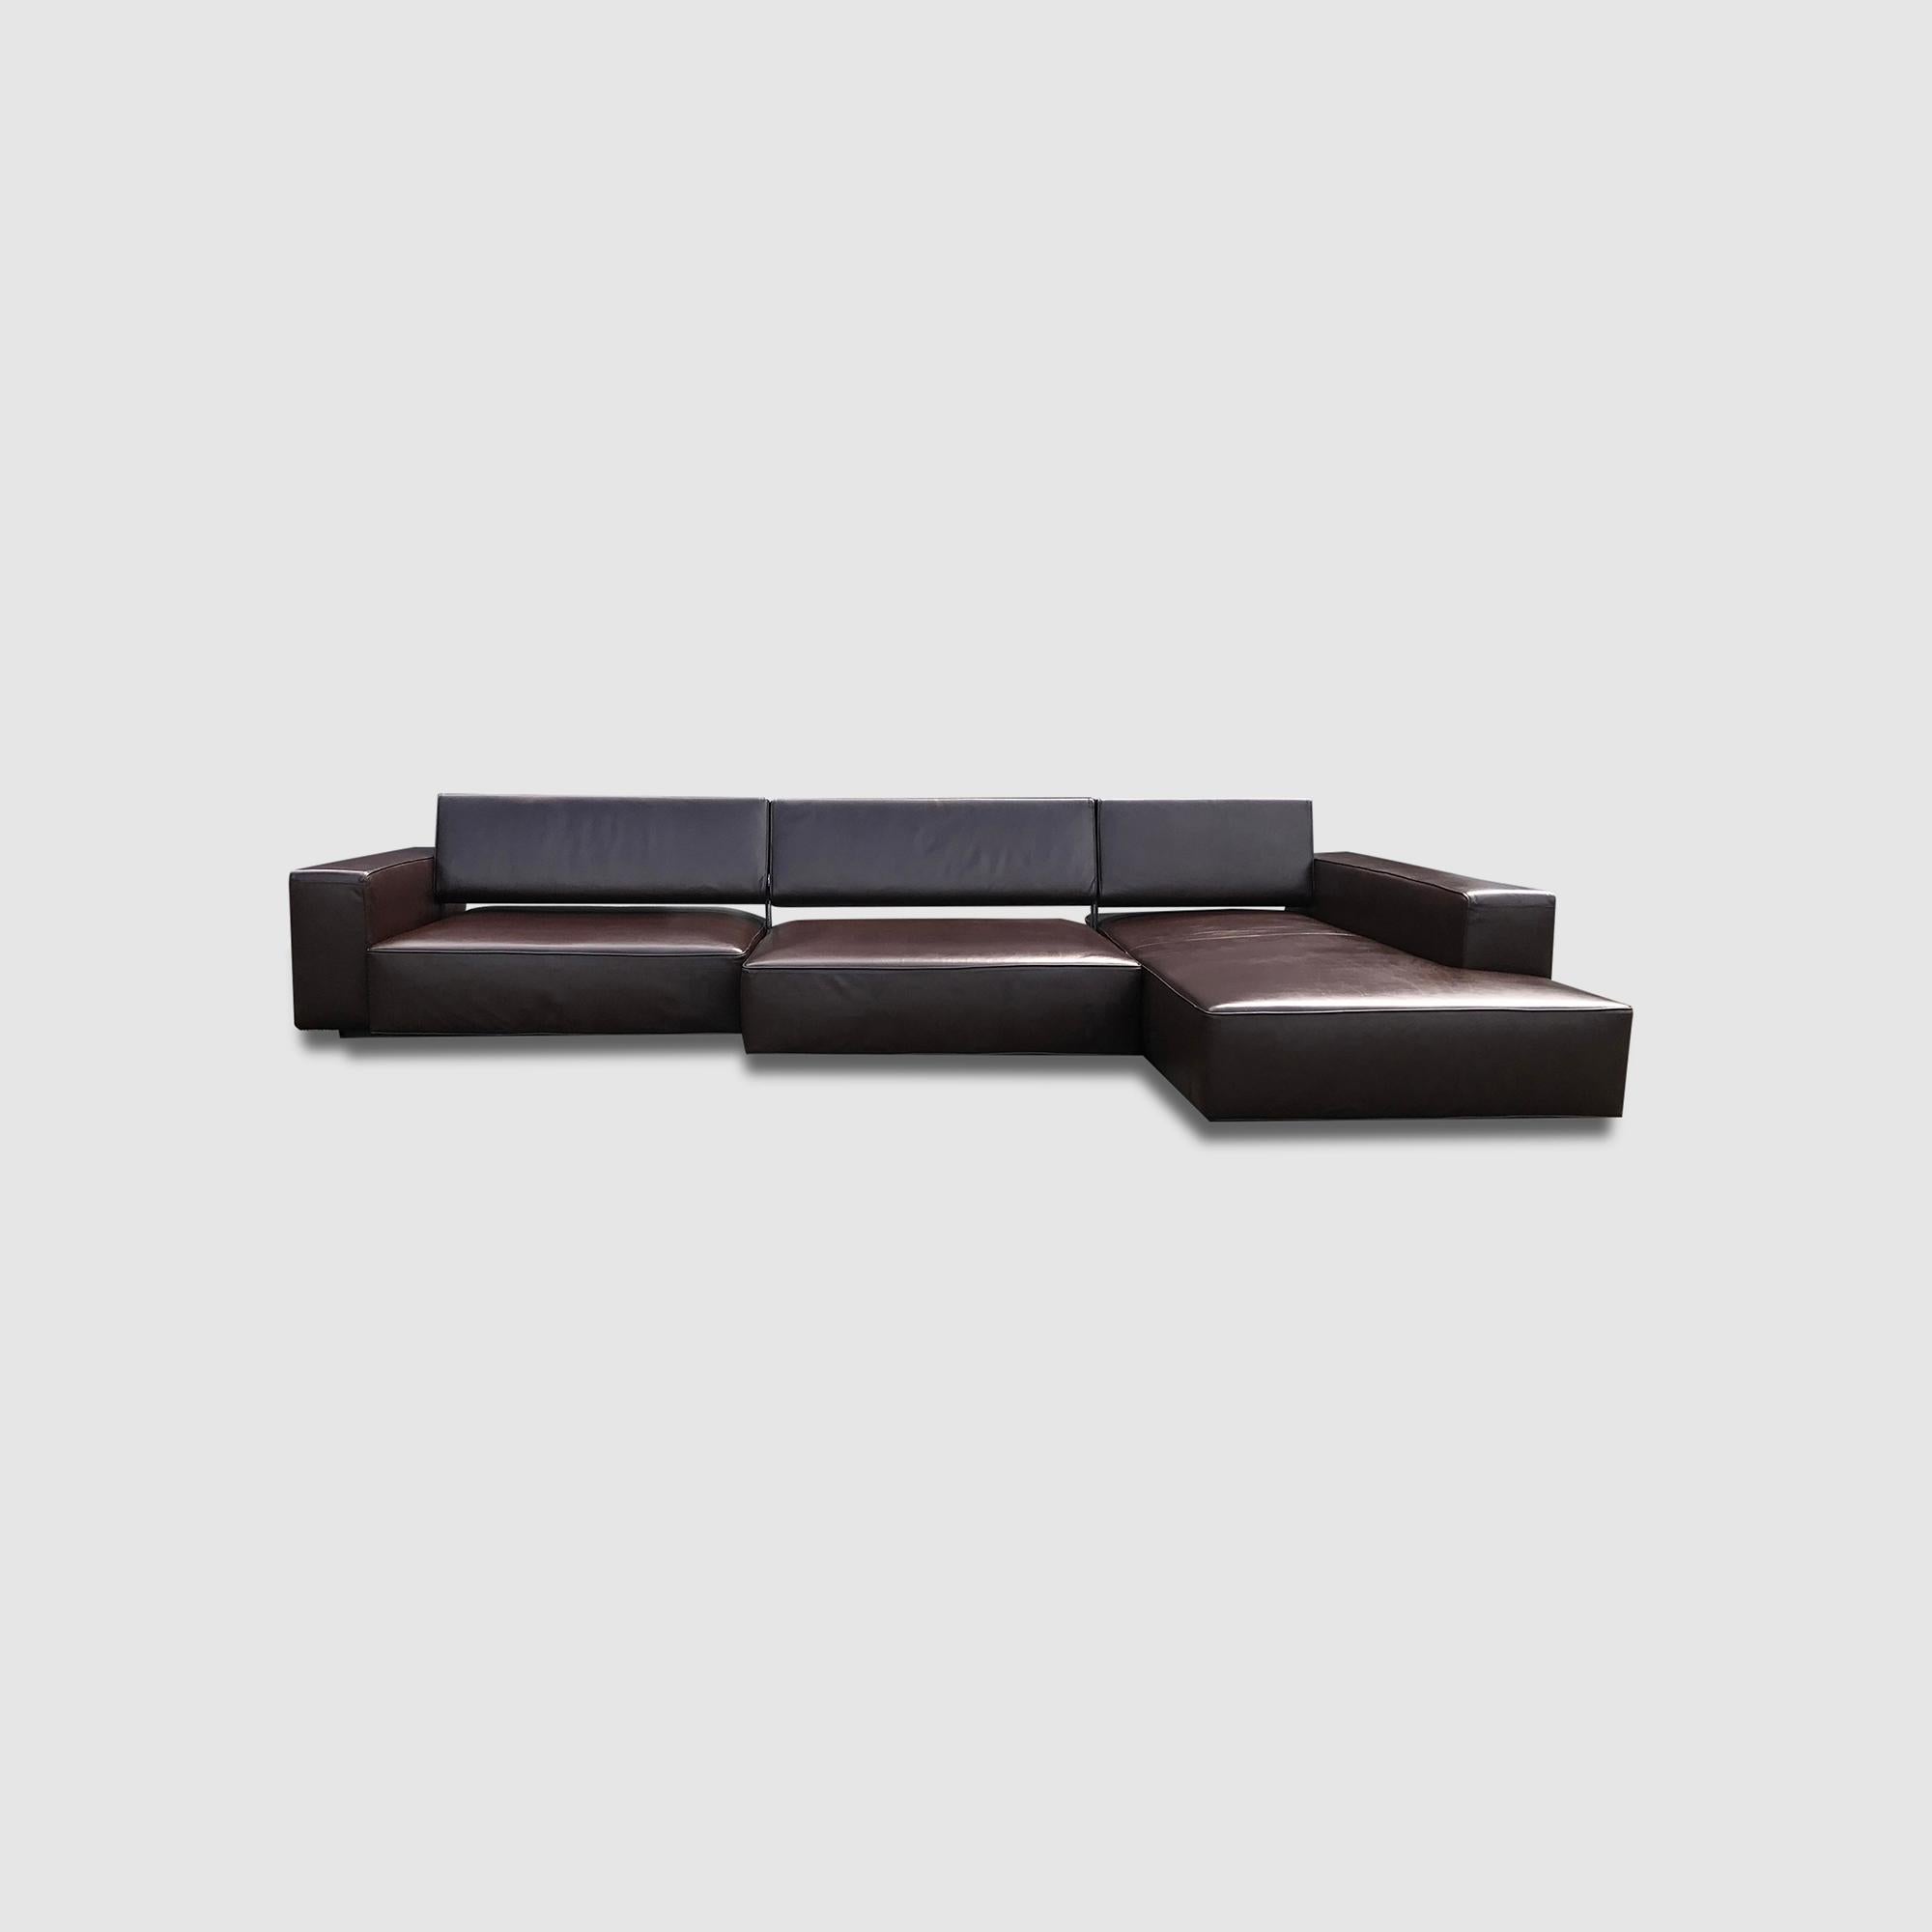 Italian Modular Leather Andy Landscape Sofa by Paolo Piva for B&B Italia 2013